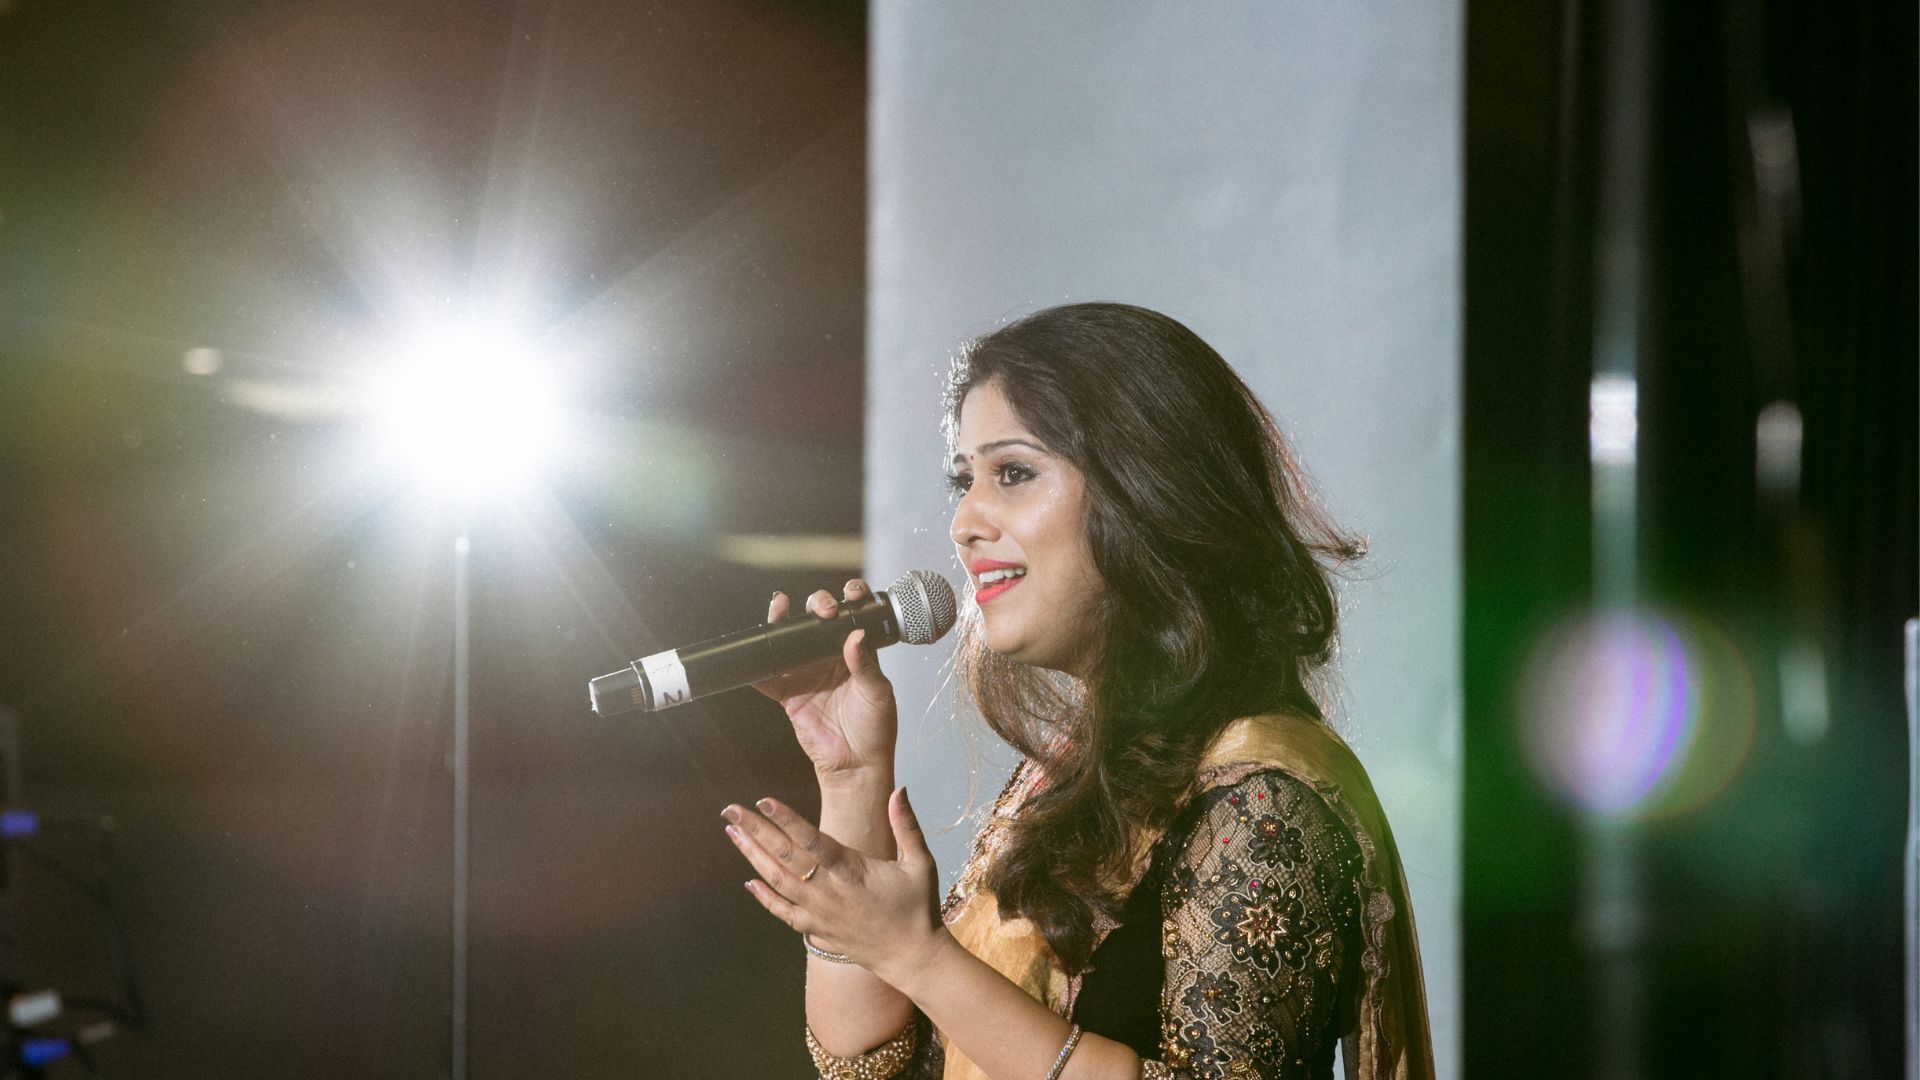 Ranjini Jose Singing On Stage